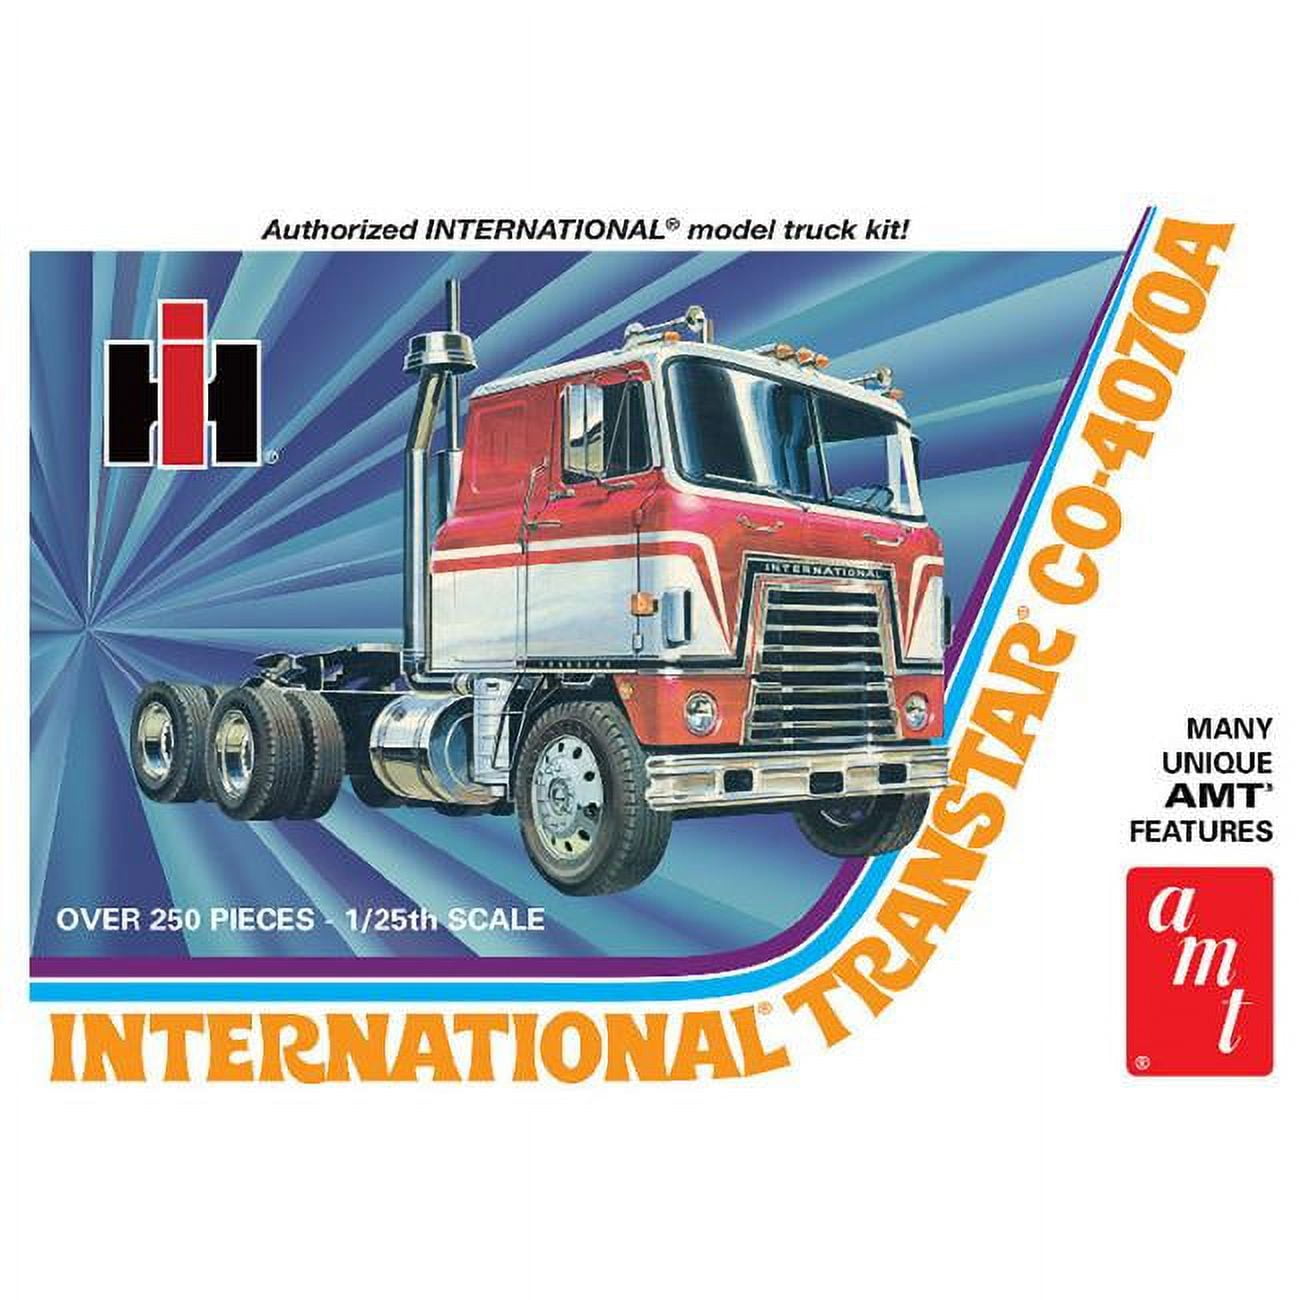 2 ) AMT INTERNATIONAL TRANSTAR 4070A TRUCK MODEL KITS WITH